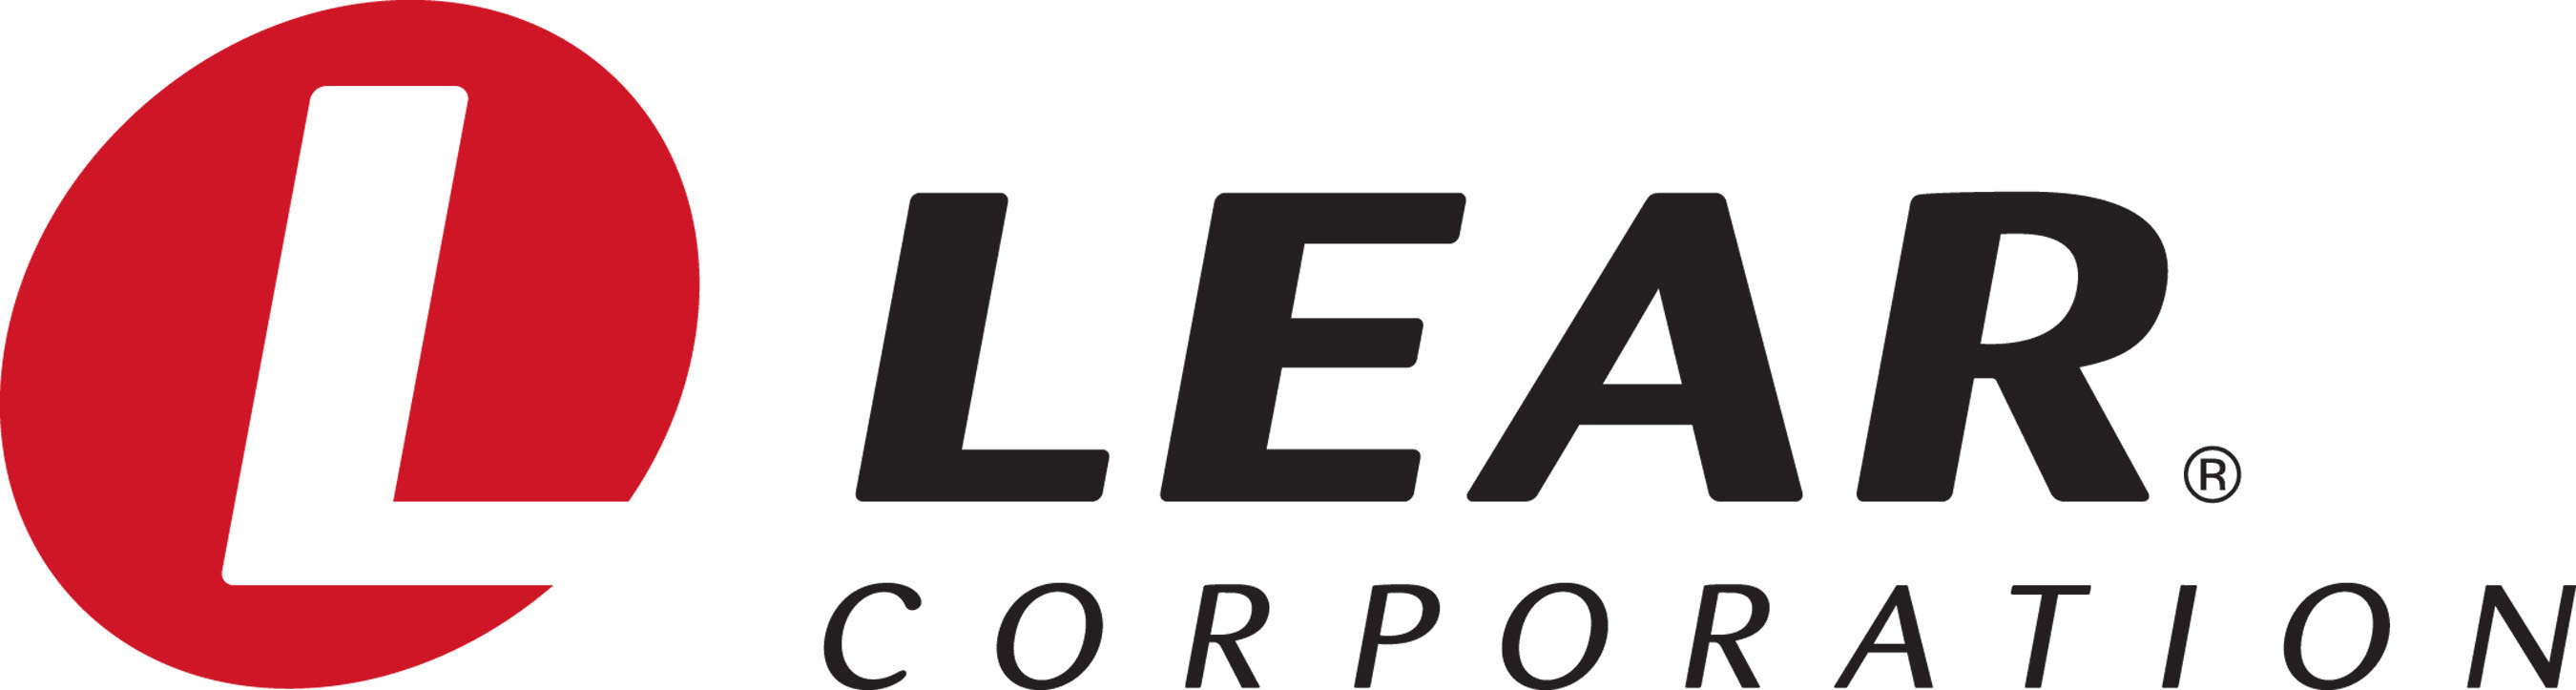 Lear Corporation Logo.